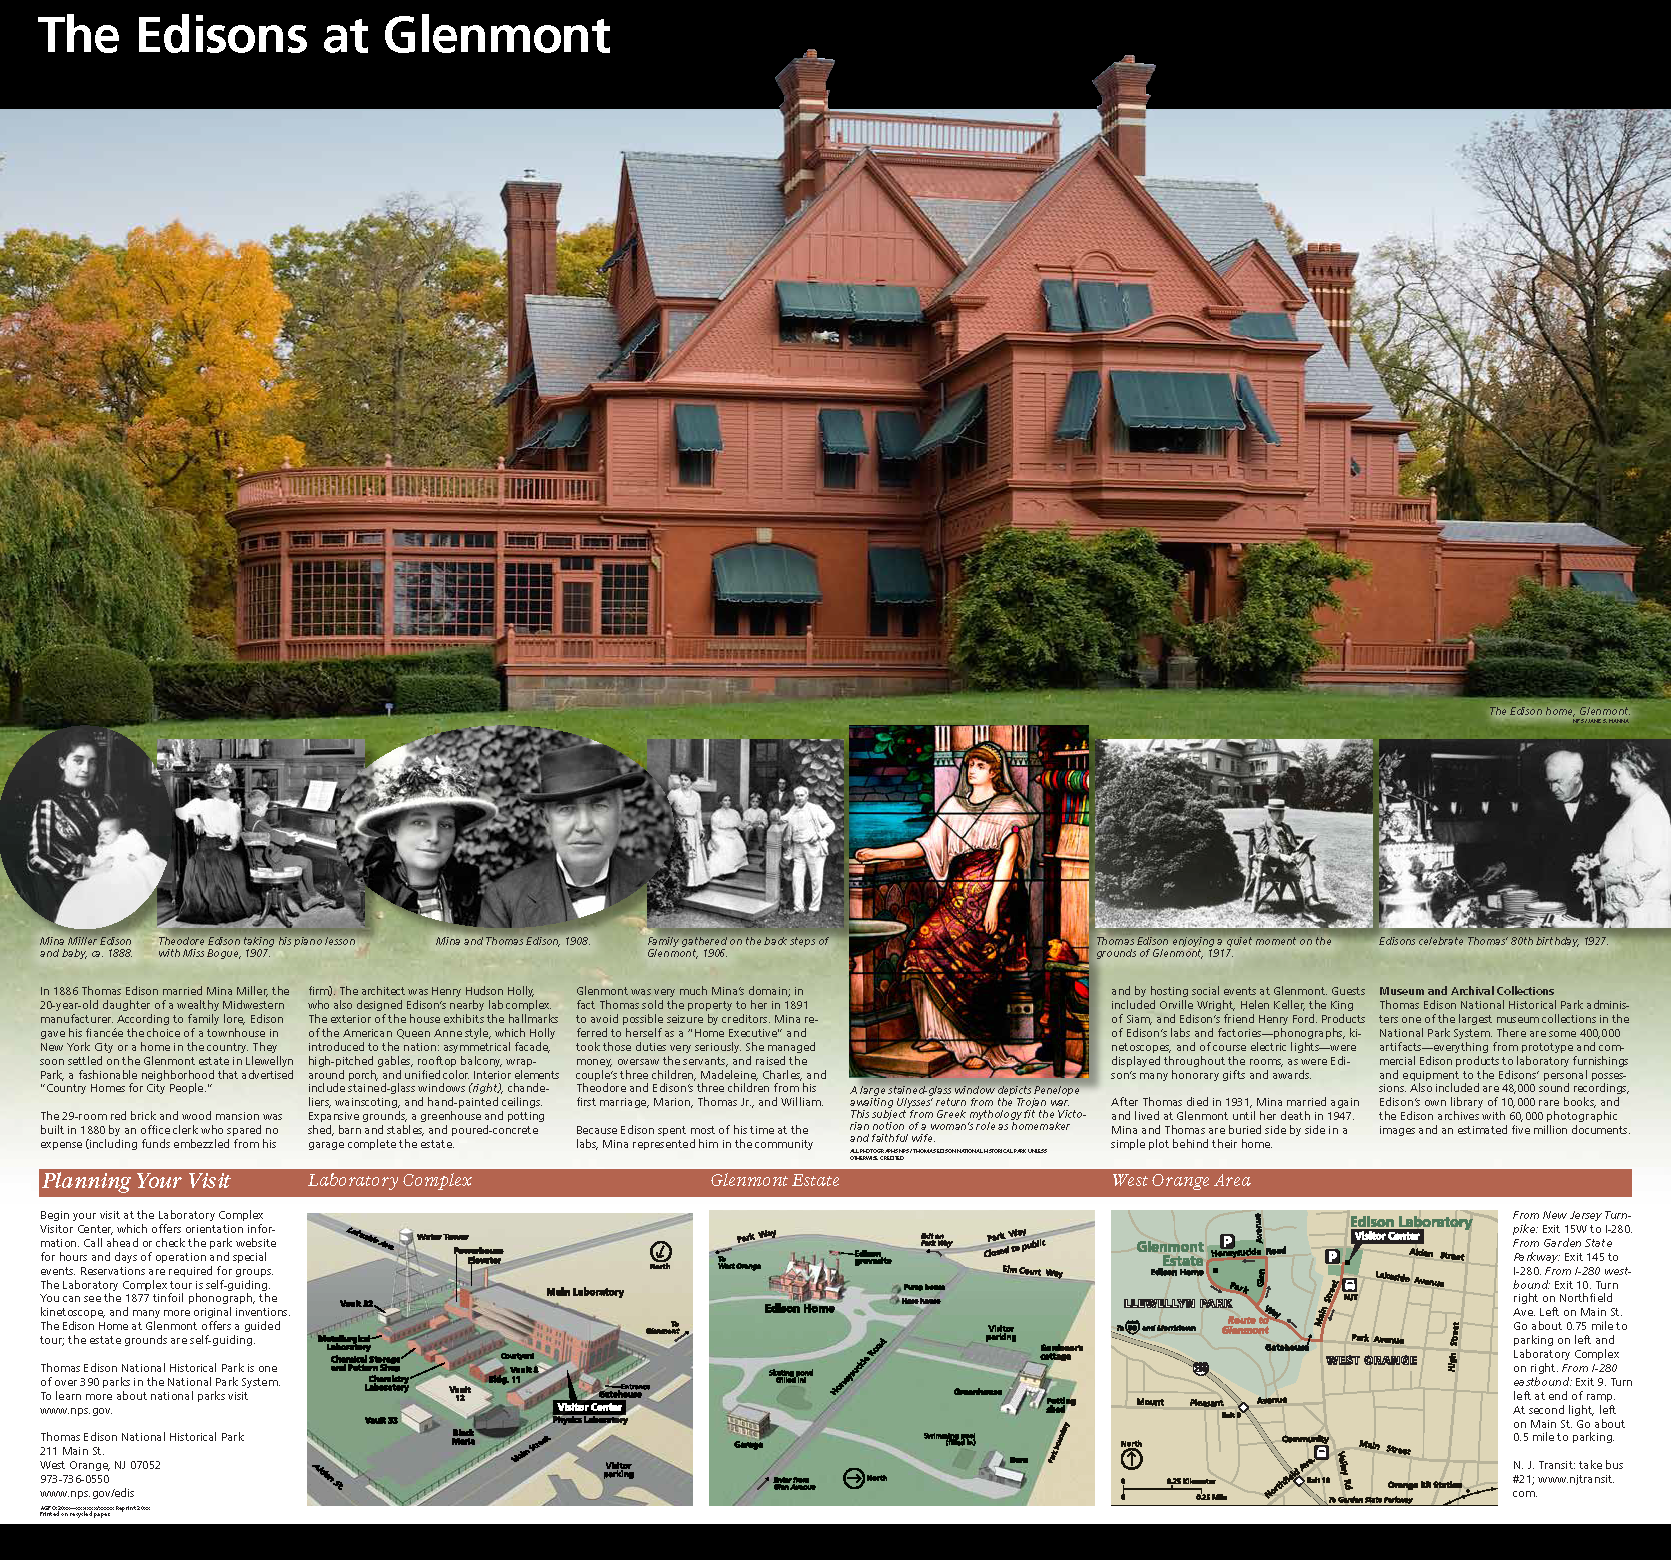 Thomas Edison National Historical Park Brochure- Thomas Edison's Home, Glenmont
(Side 2)